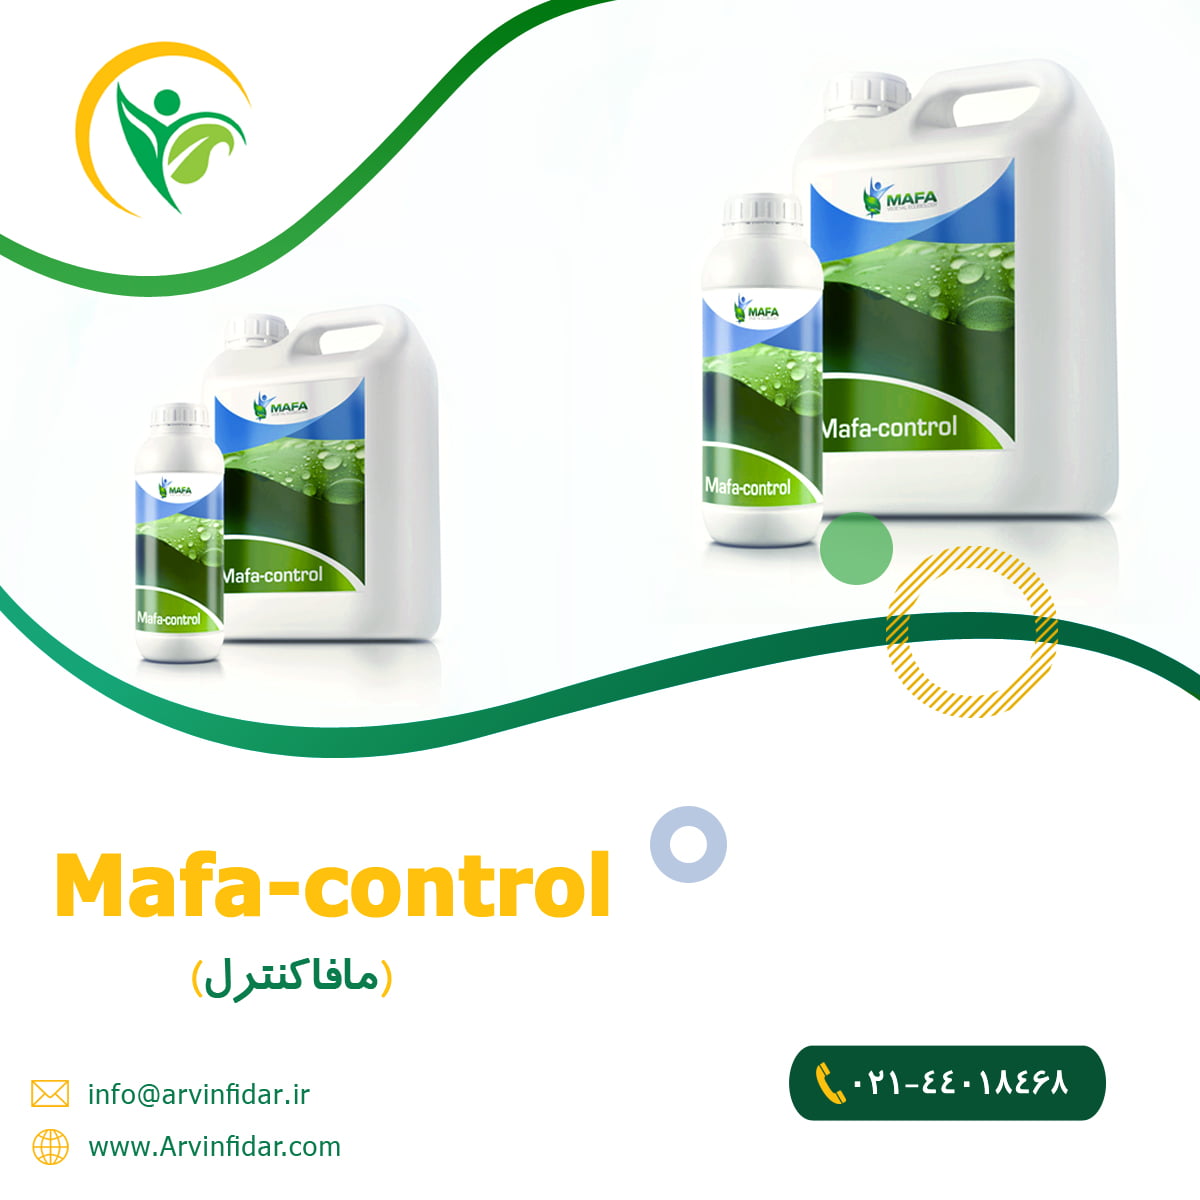 mafac - مافا کنترل